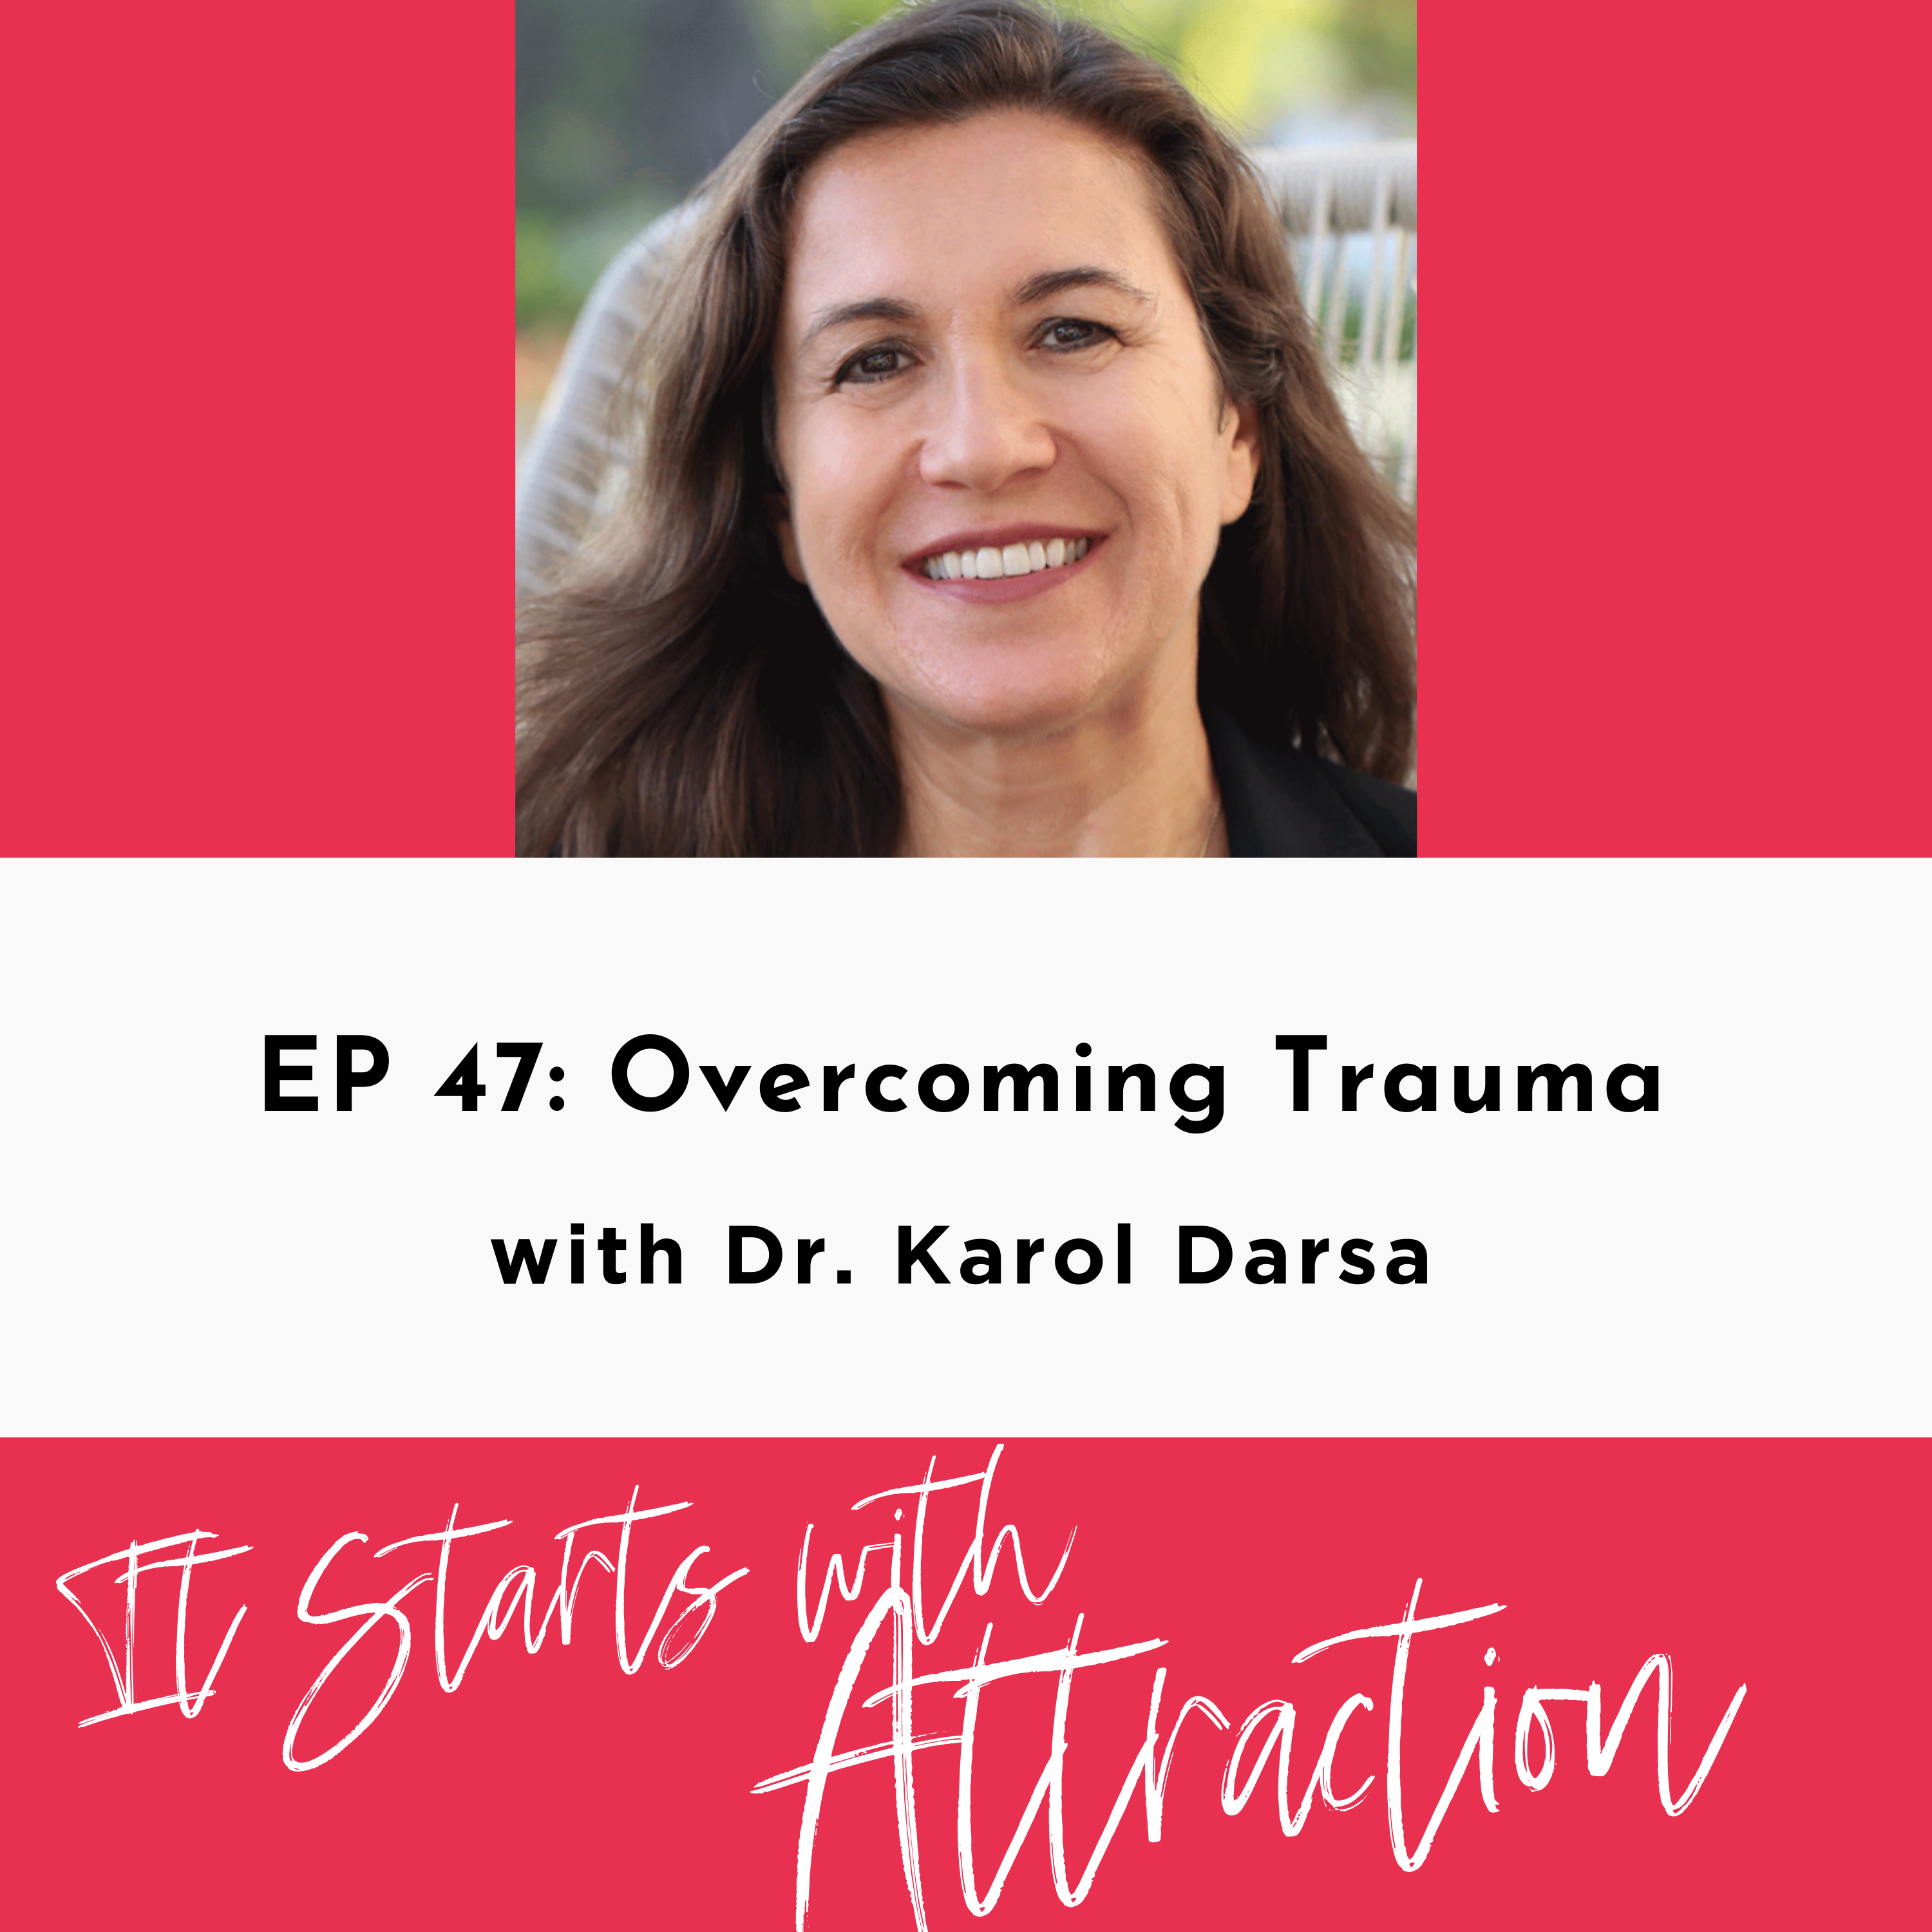 Overcoming Trauma with Dr. Karol Darsa